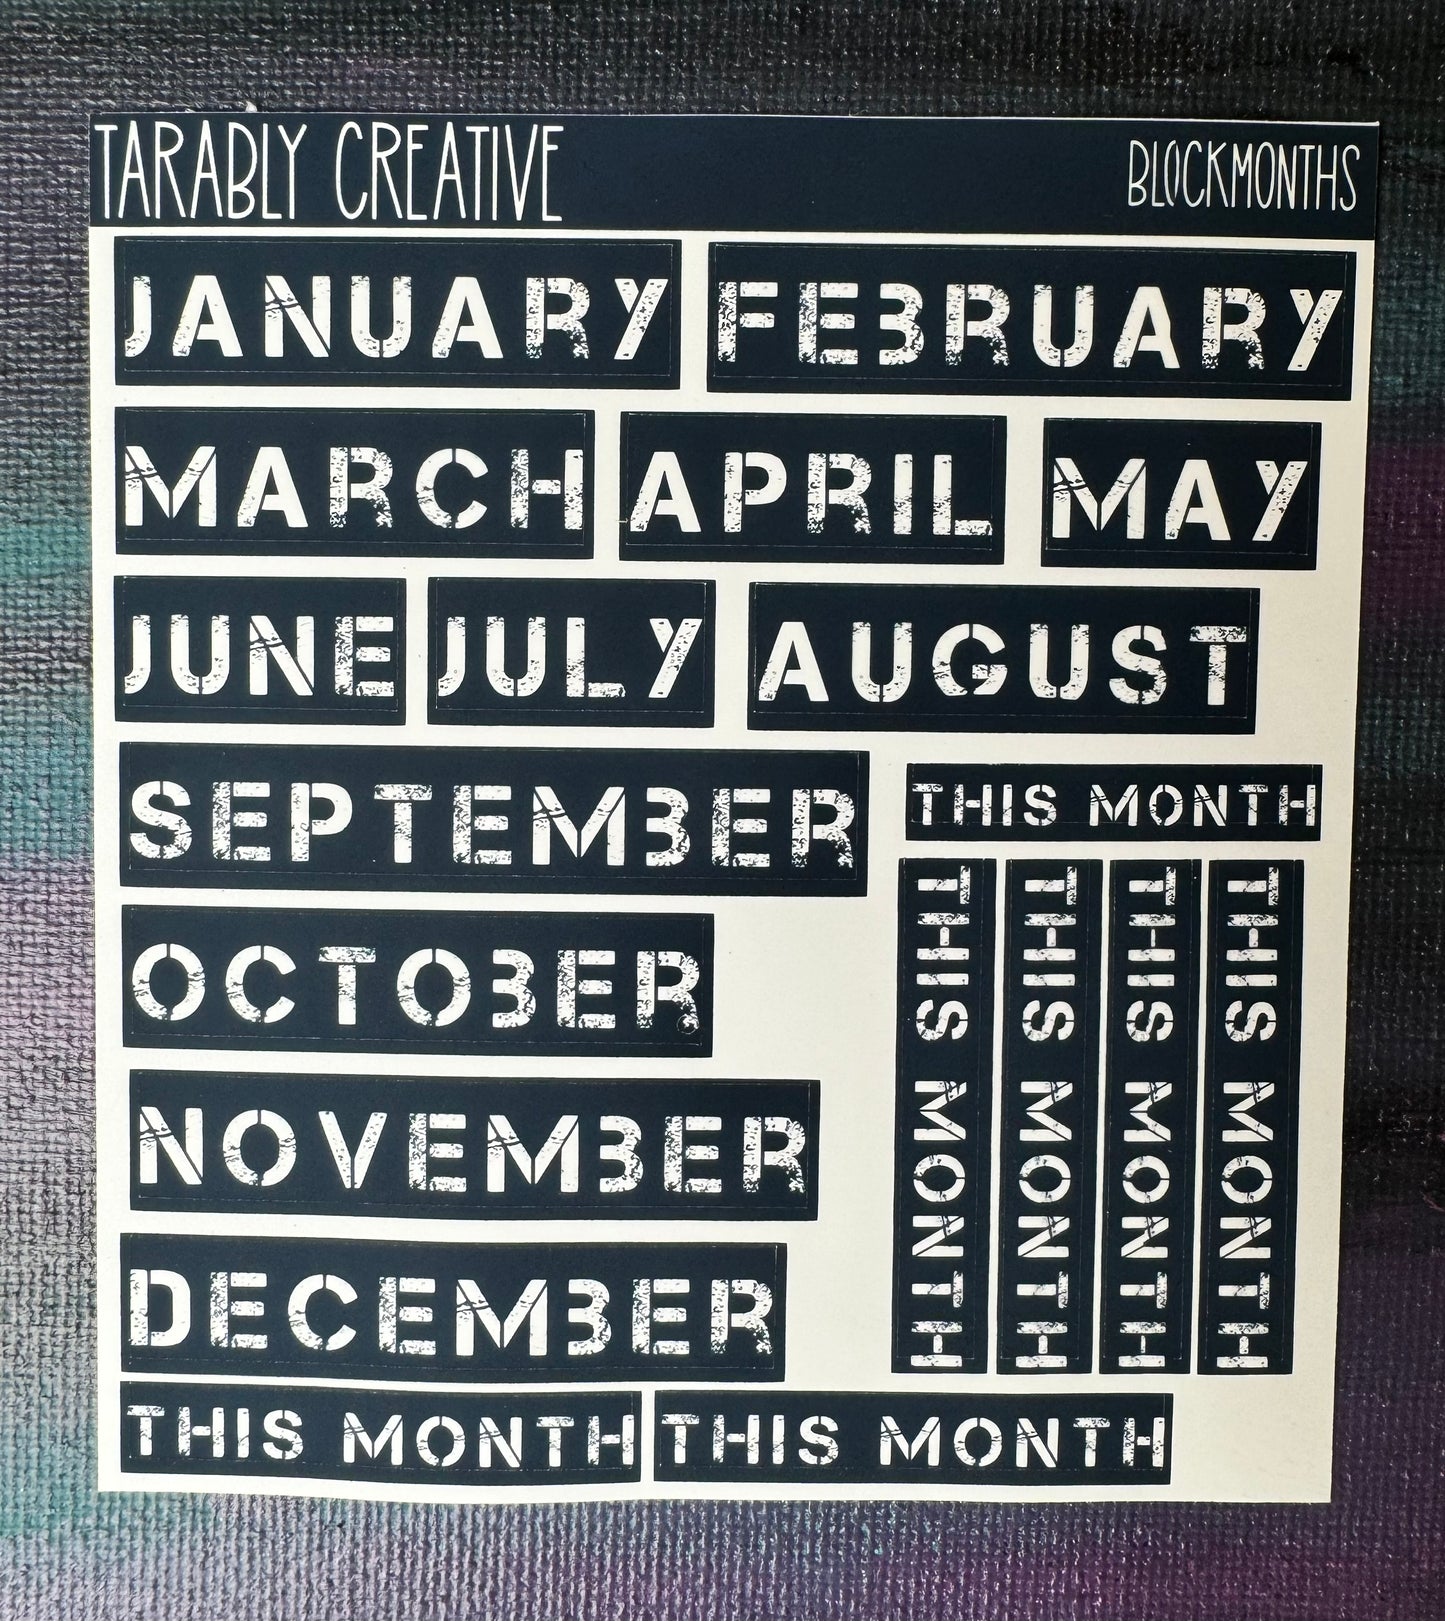 Blok Months